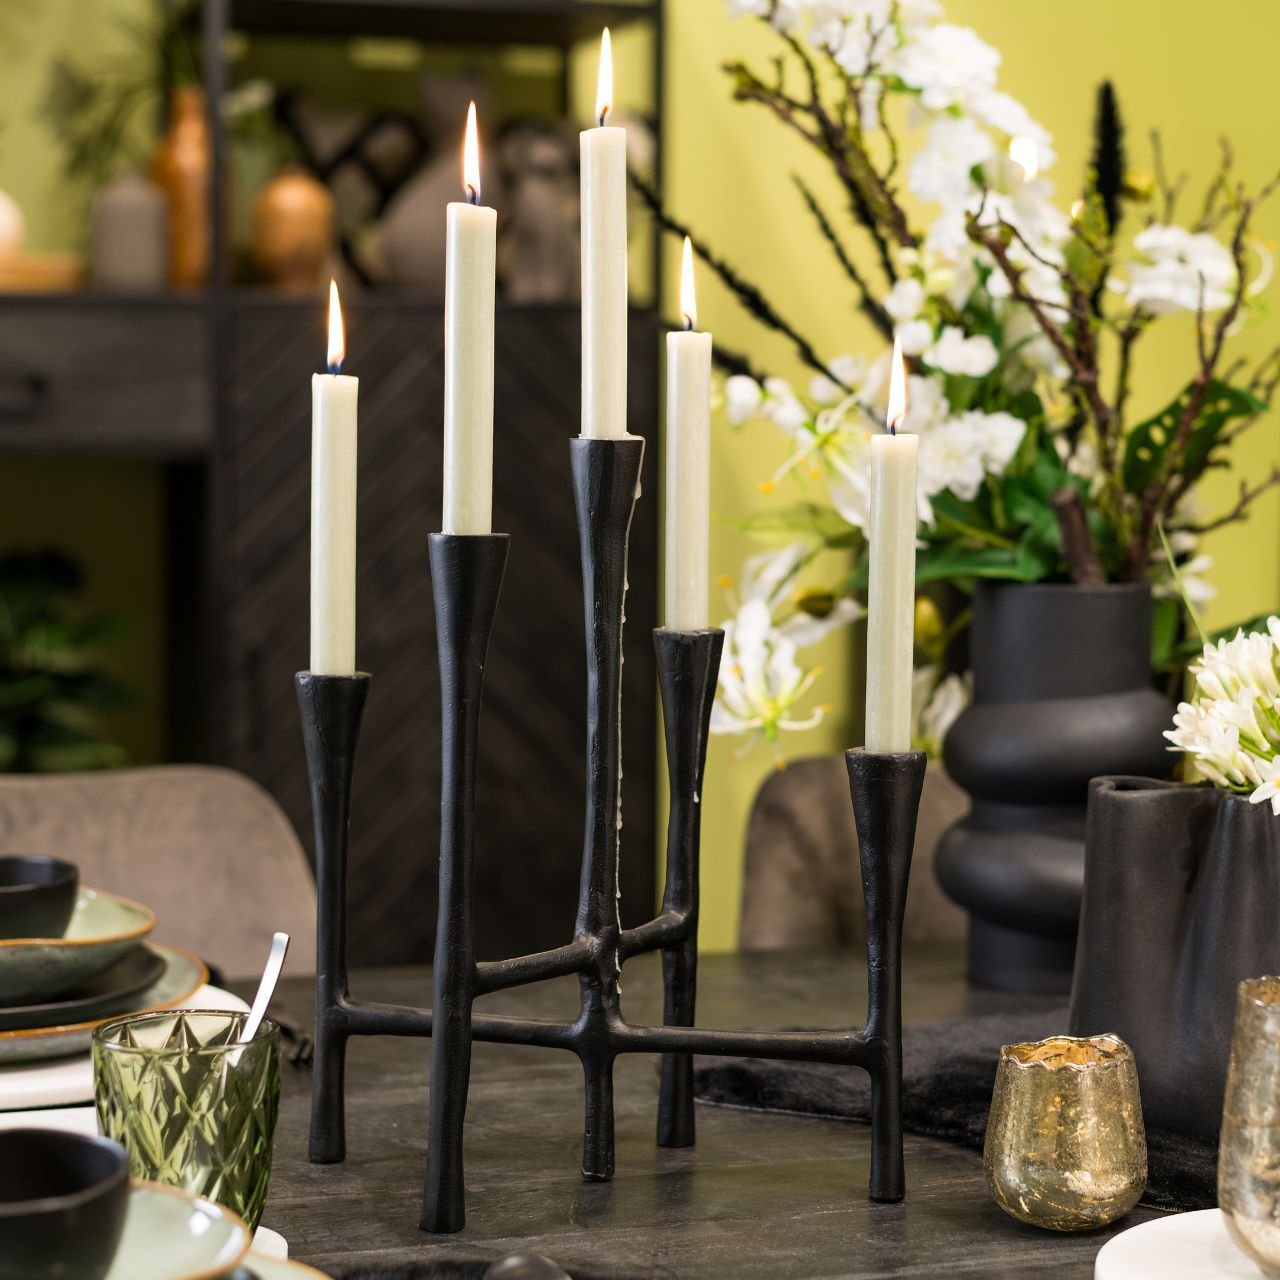 Bougeoir pour 5 bougies en métal noir (L/H/P) 31x36x17cm